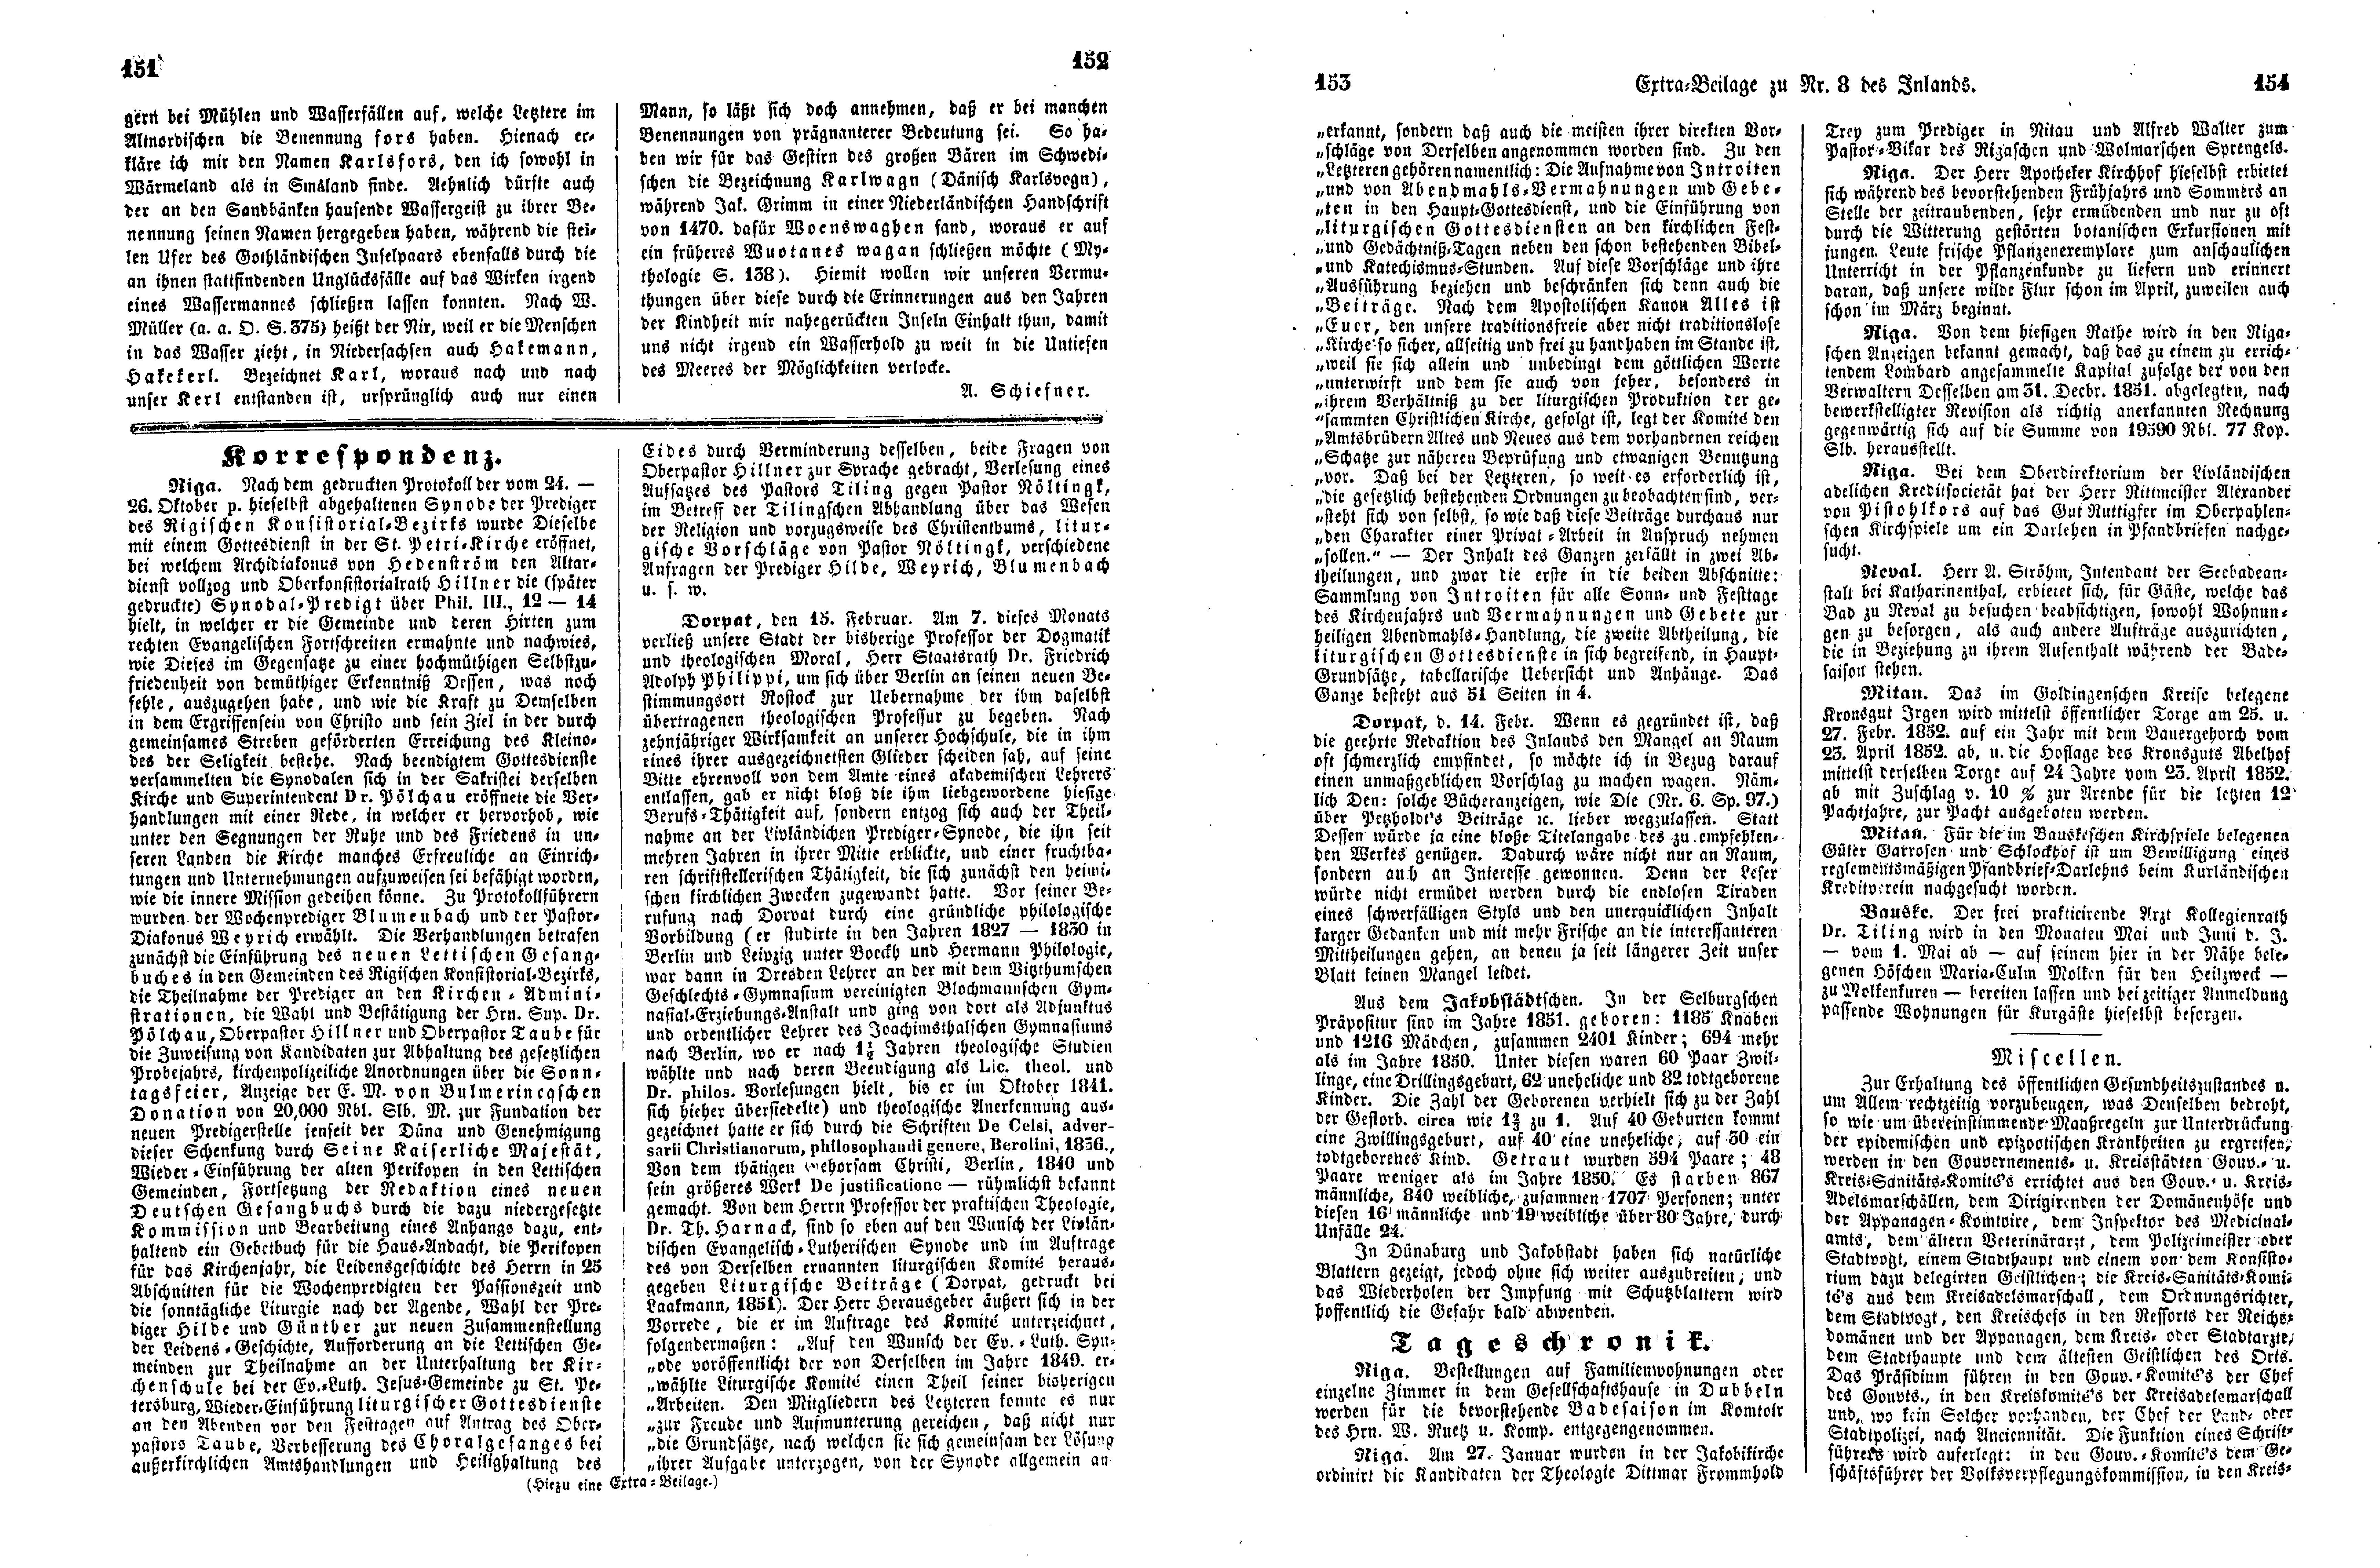 Das Inland [17] (1852) | 42. (151-154) Main body of text